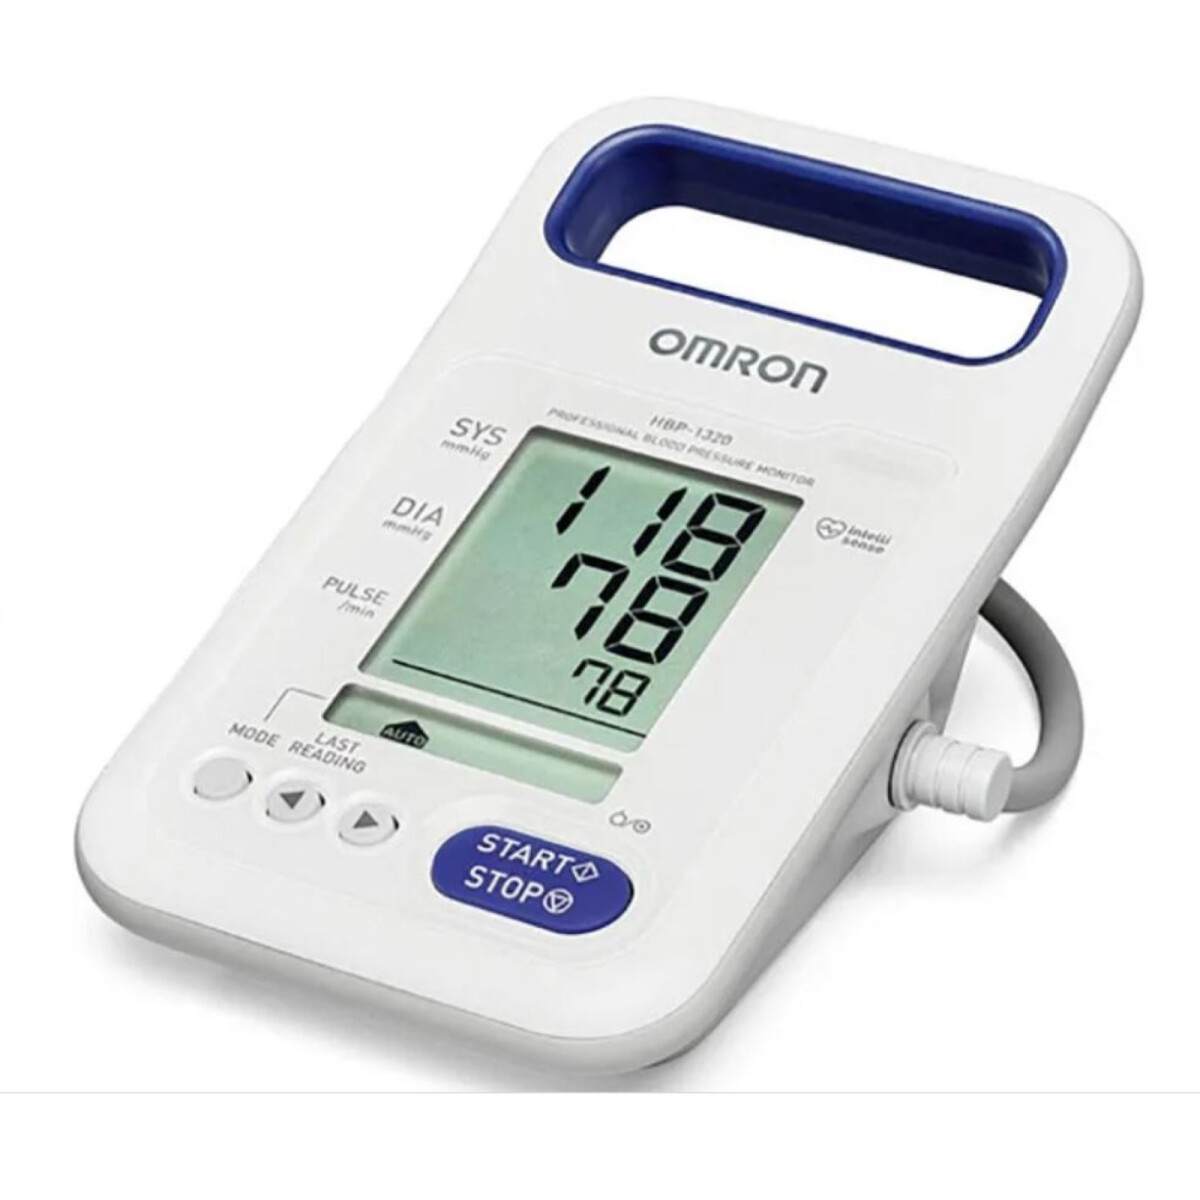 Upper Arm Blood Pressure Monitor – Wellue